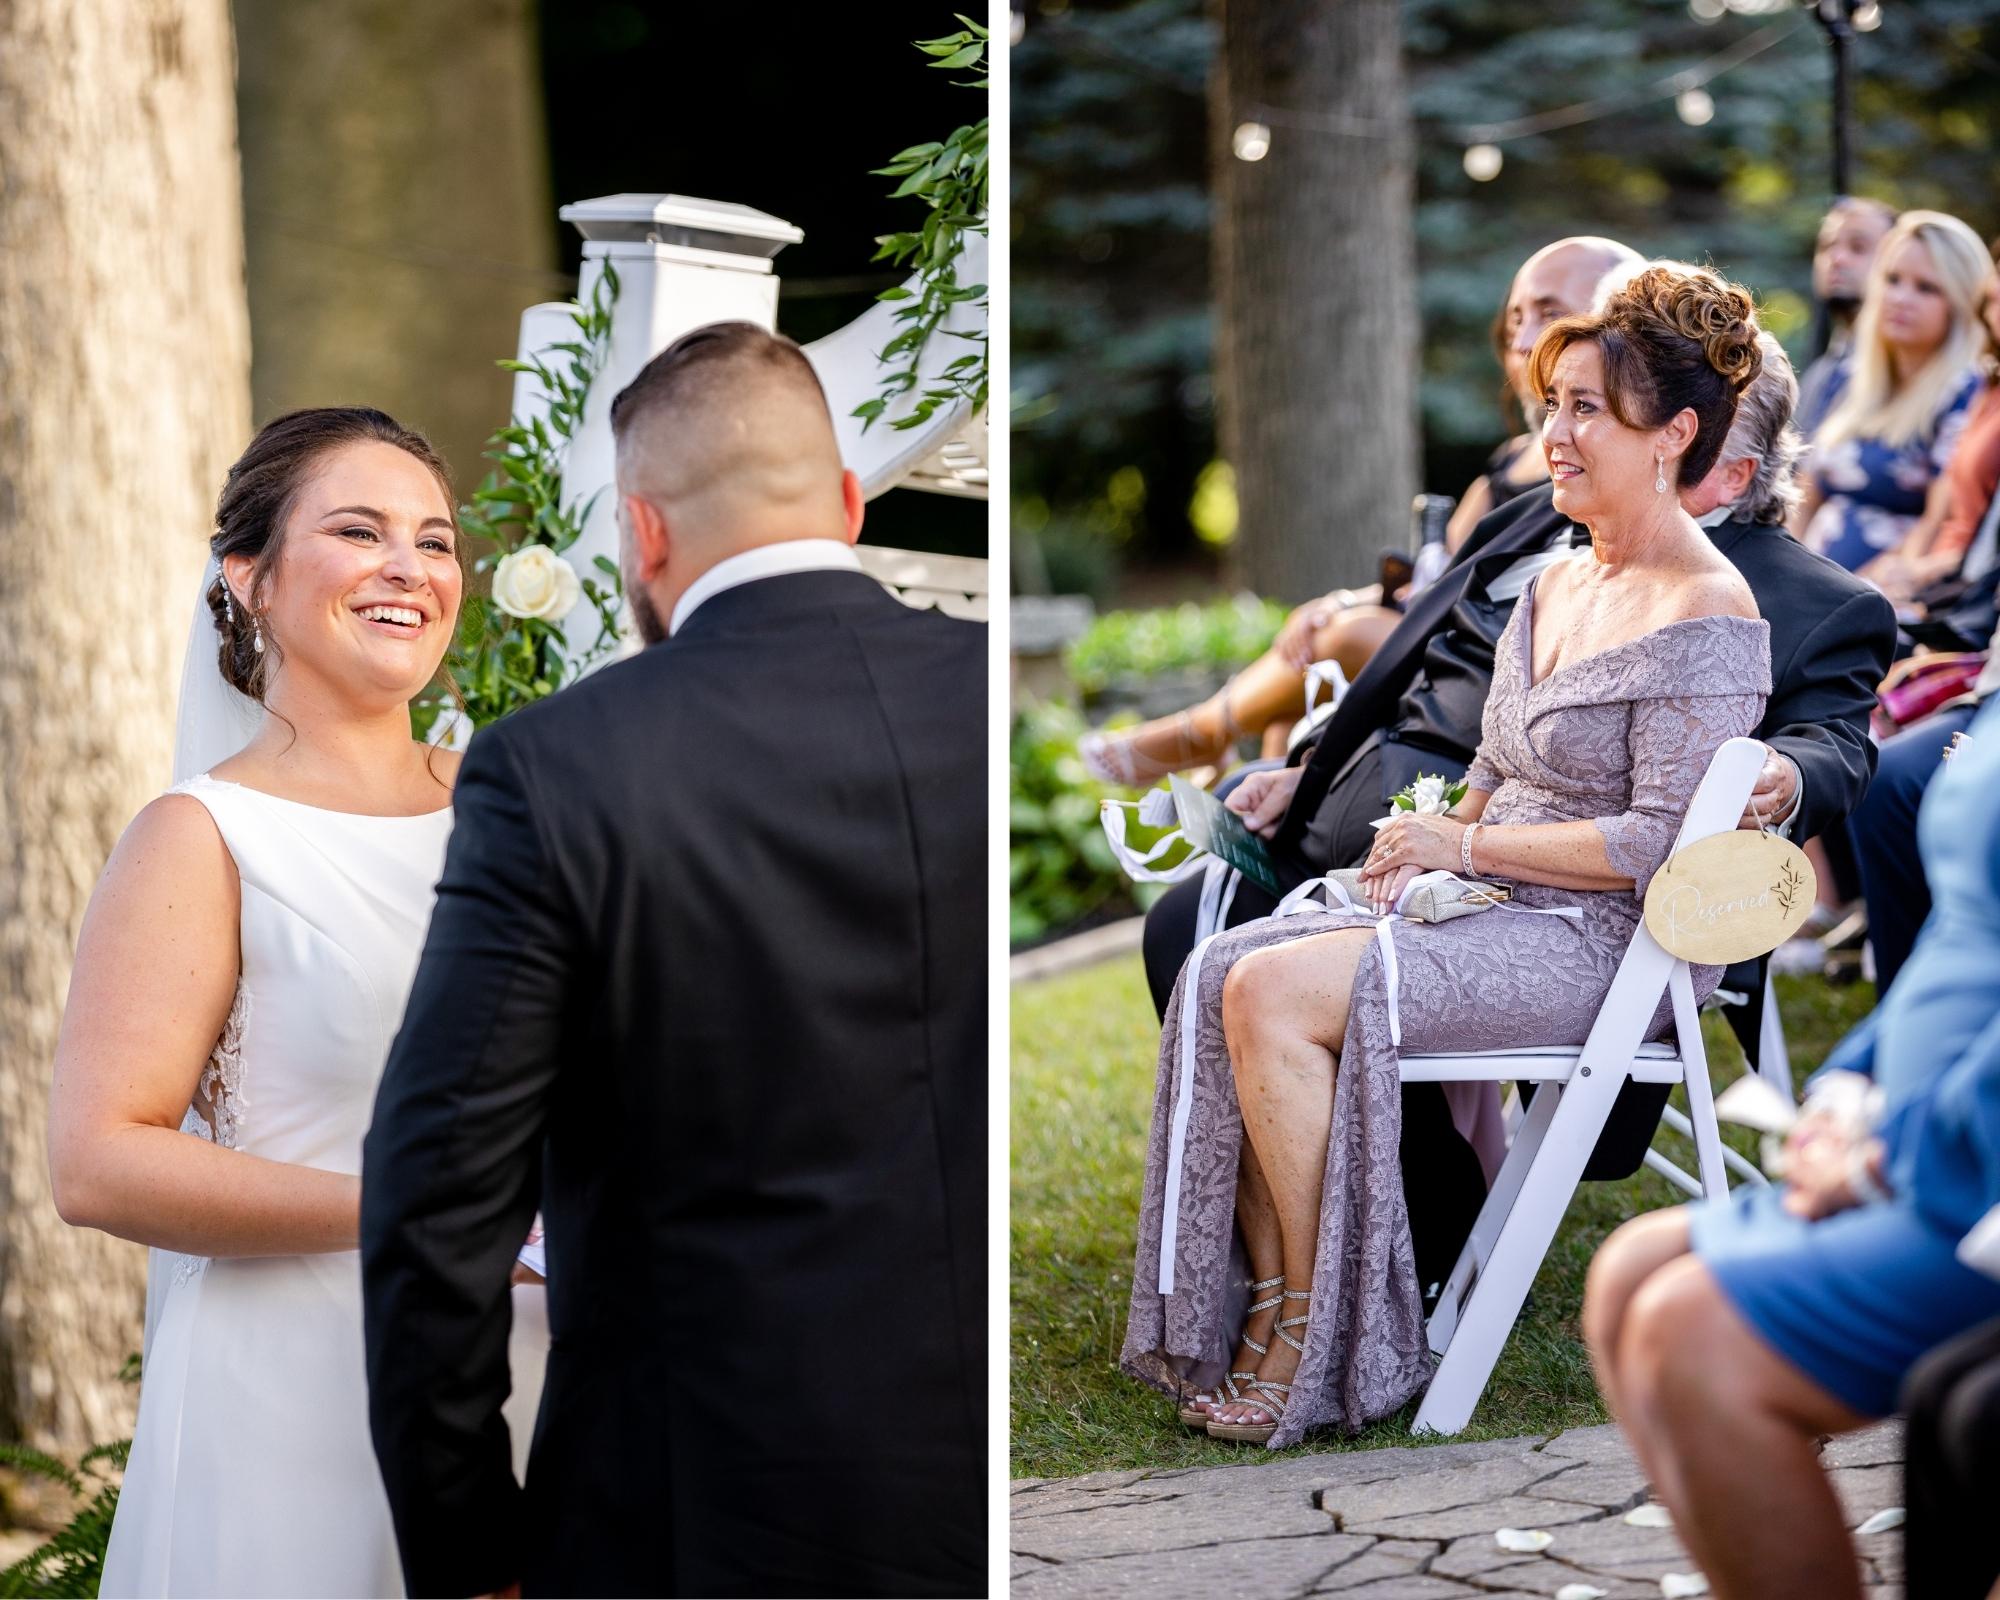 Wedding Ceremony Portraits from Rockfield Manor in Bel Air, MD - Luxury Wedding Photographer - Wedding Photographer DMV